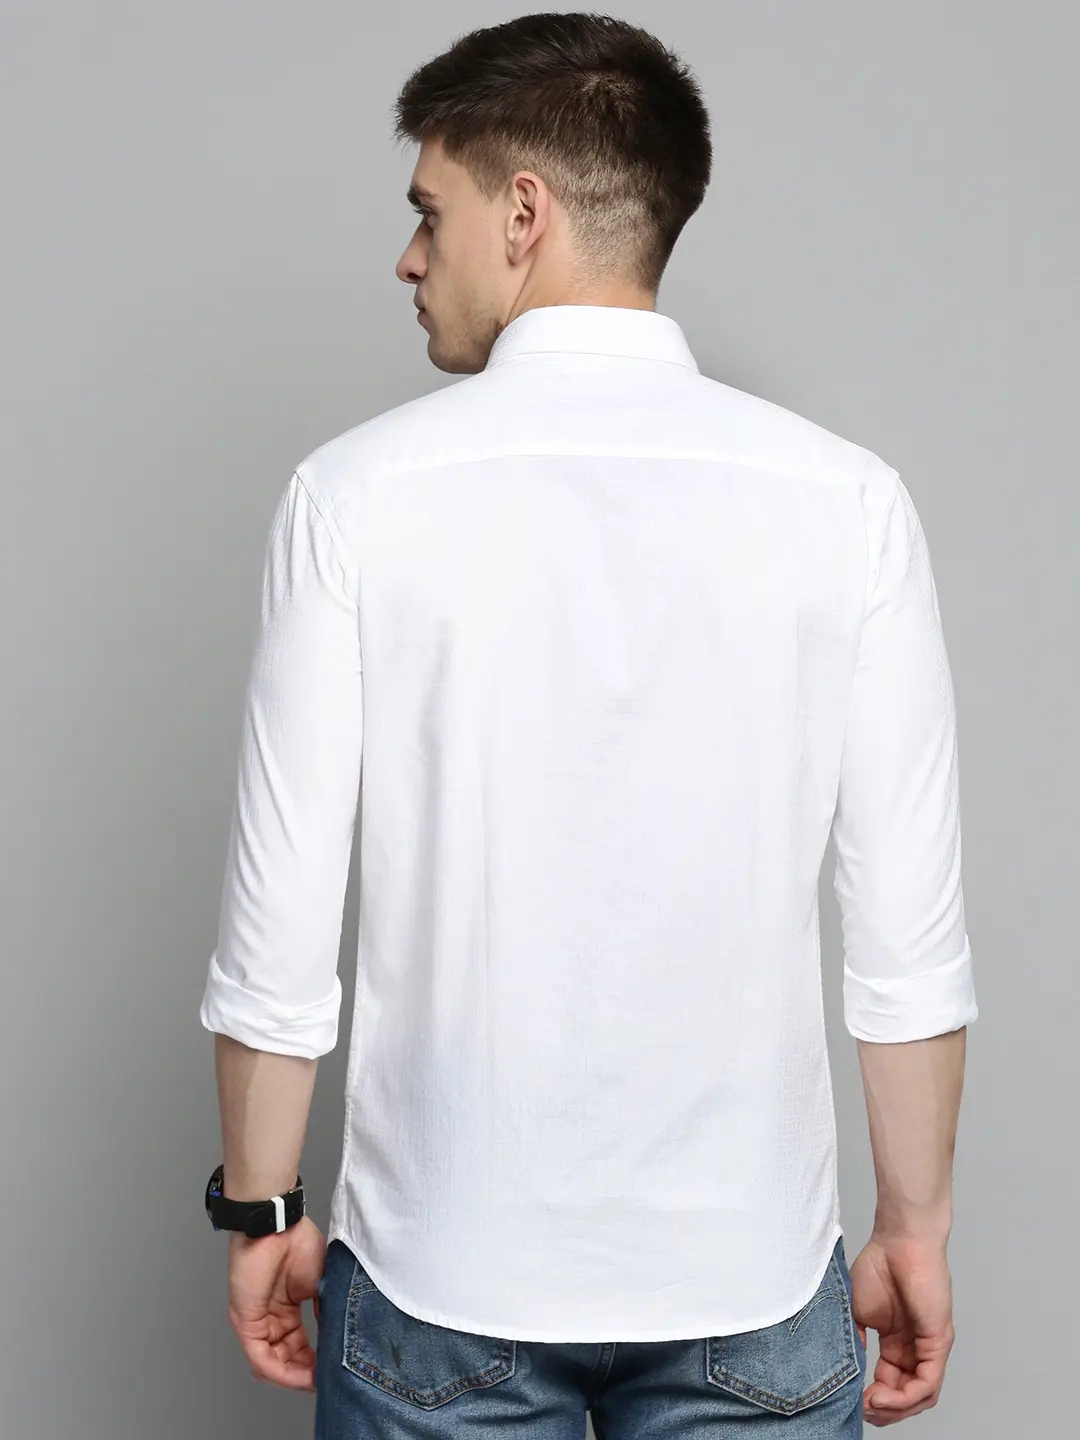 SHOWOFF Men's Spread Collar White Self Design Shirt